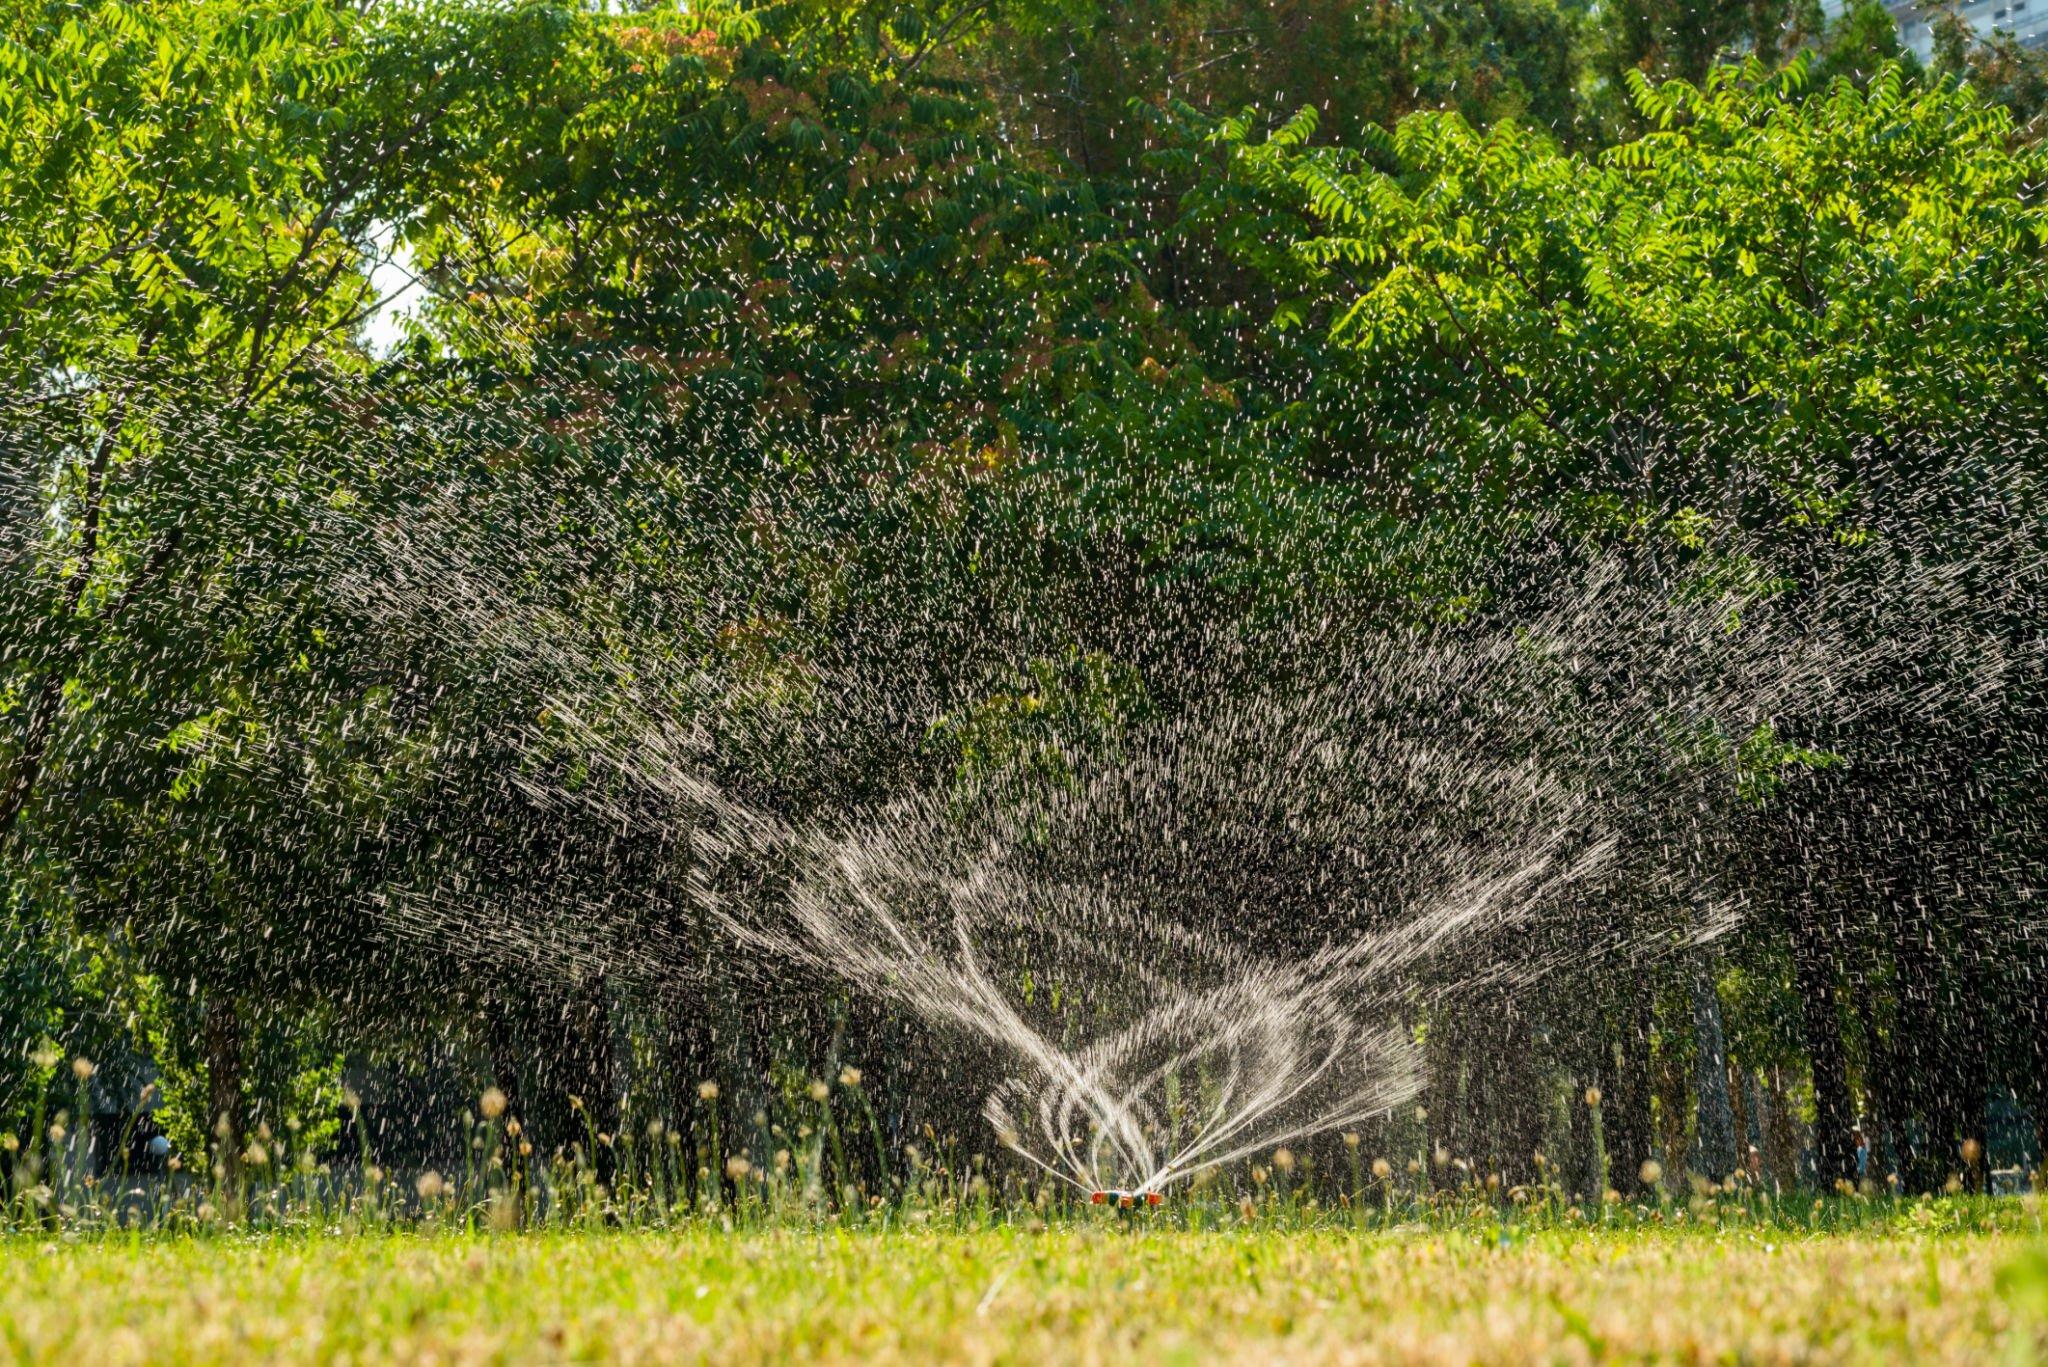 How to Prevent Sprinkler System Overspray